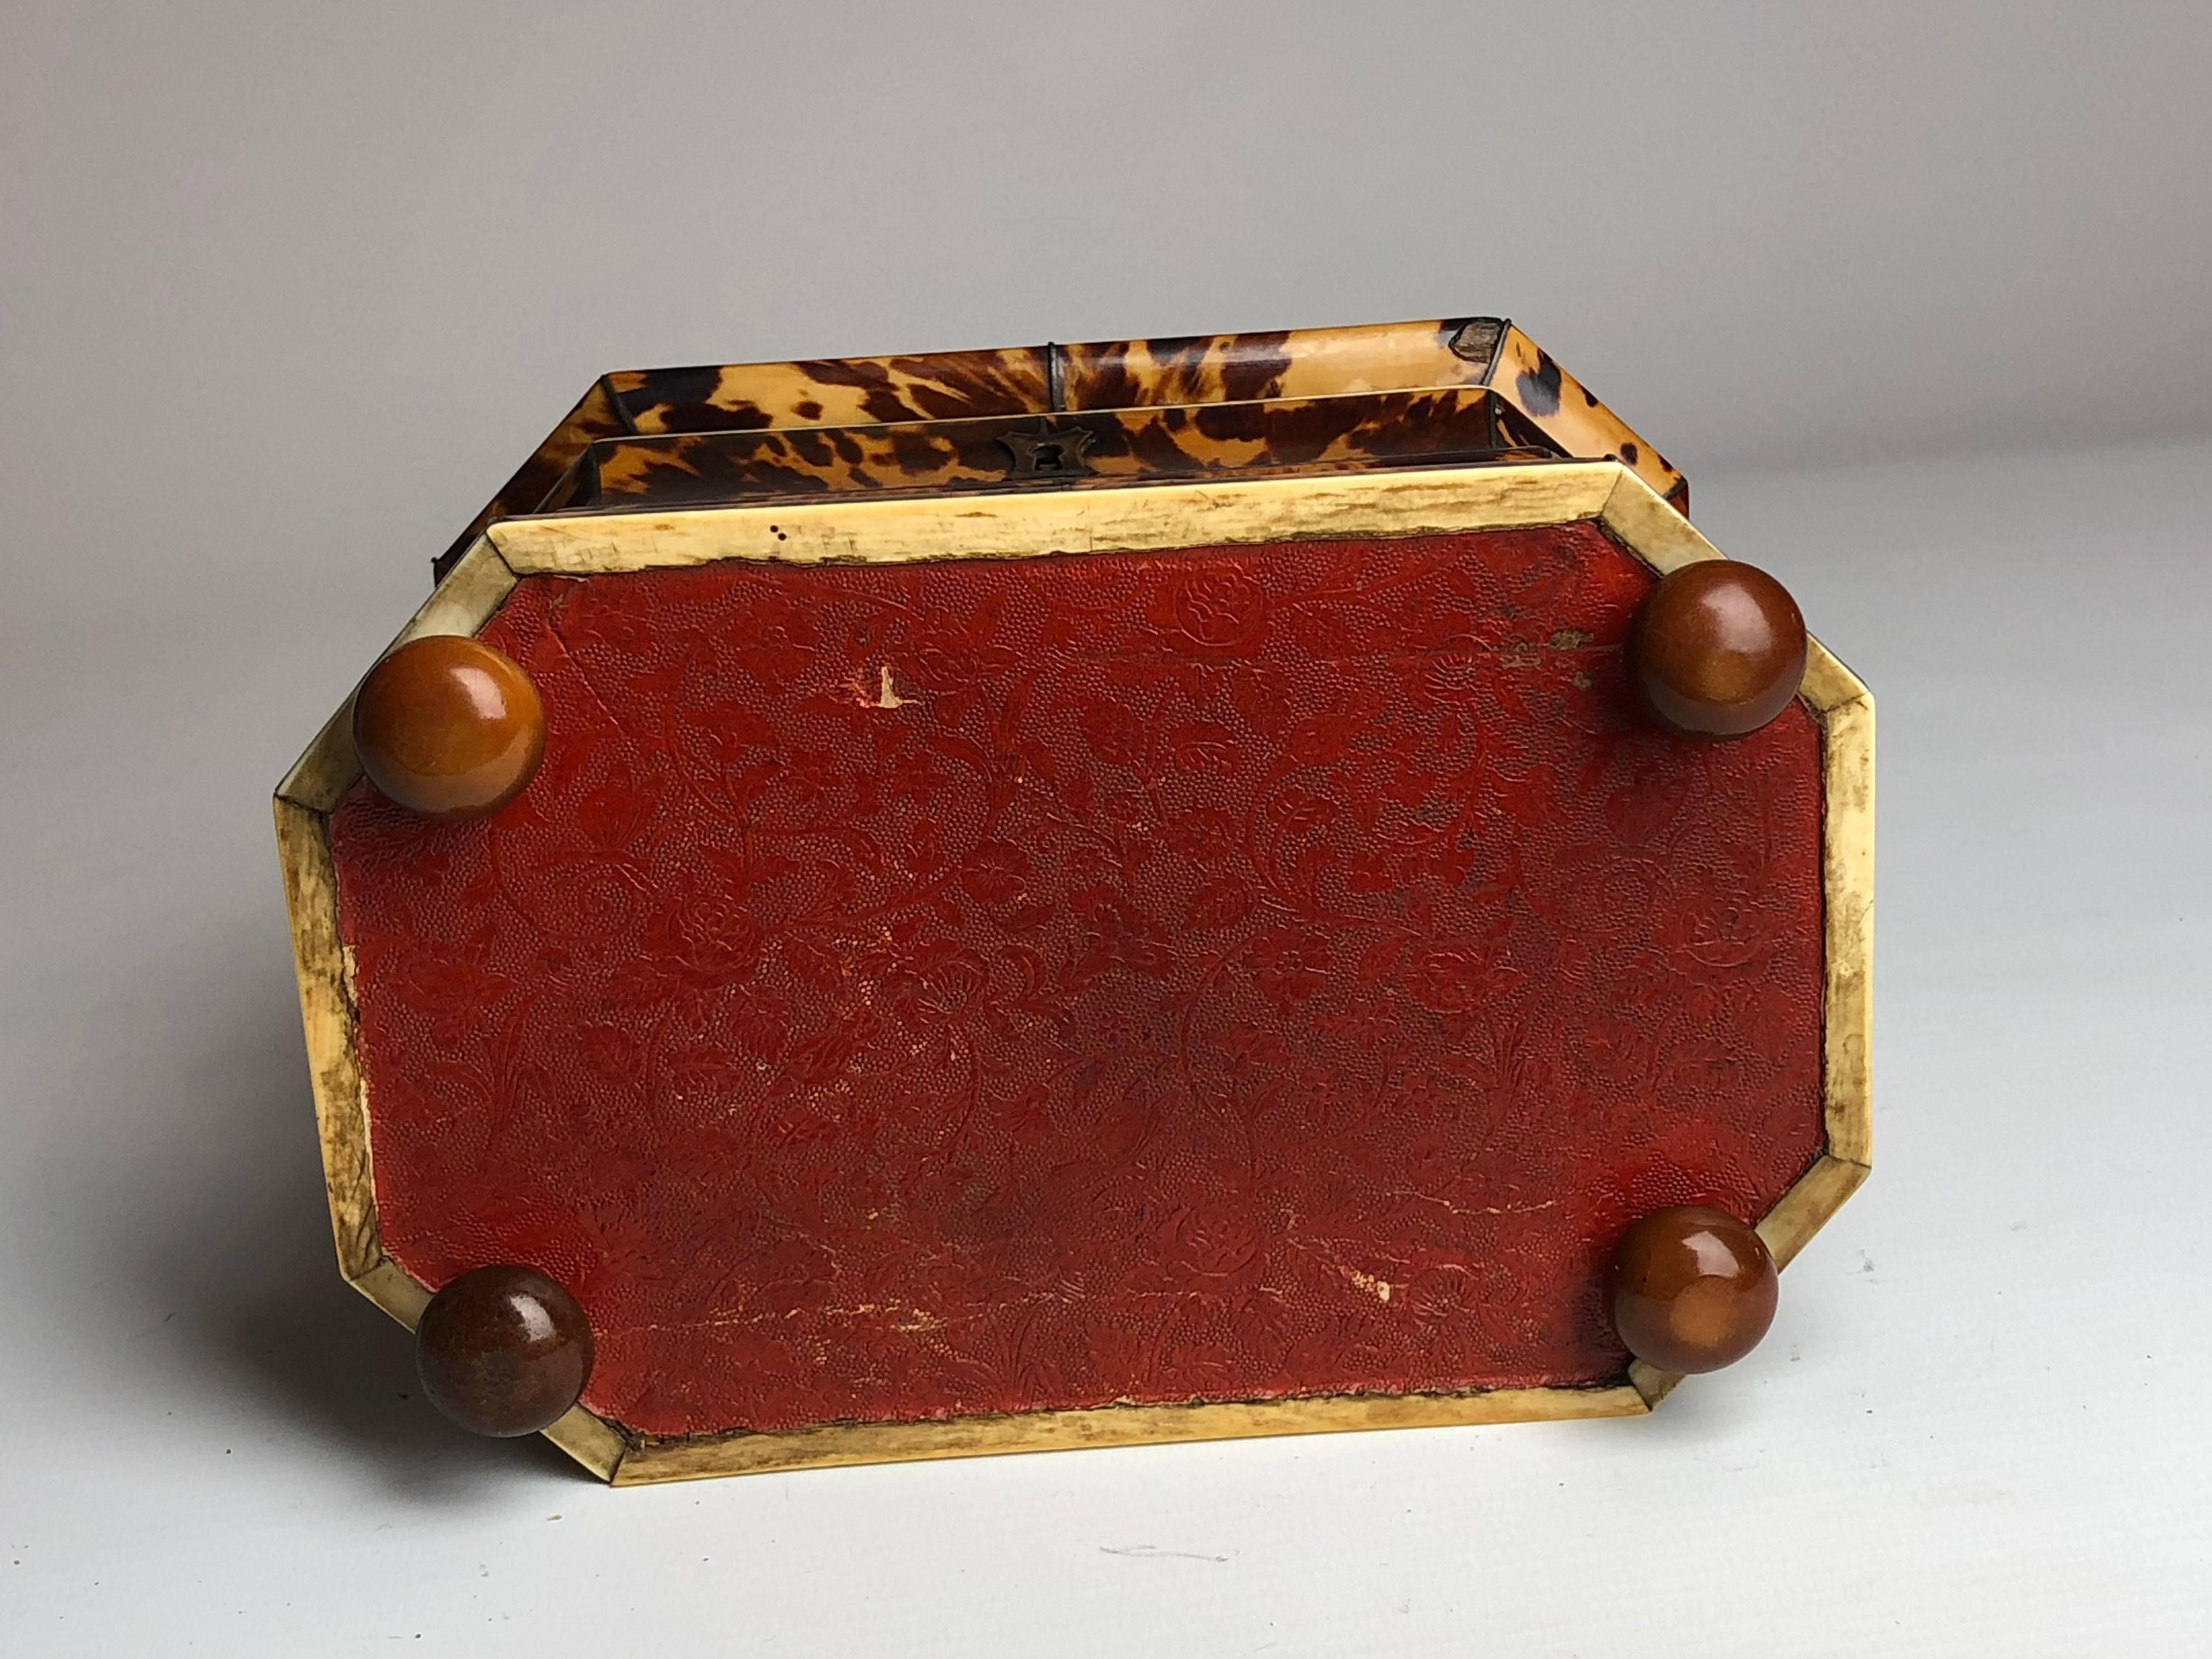 Fruitwood Regency Blonde Tortoiseshell Tea Caddy with Pagoda Top, circa 1820